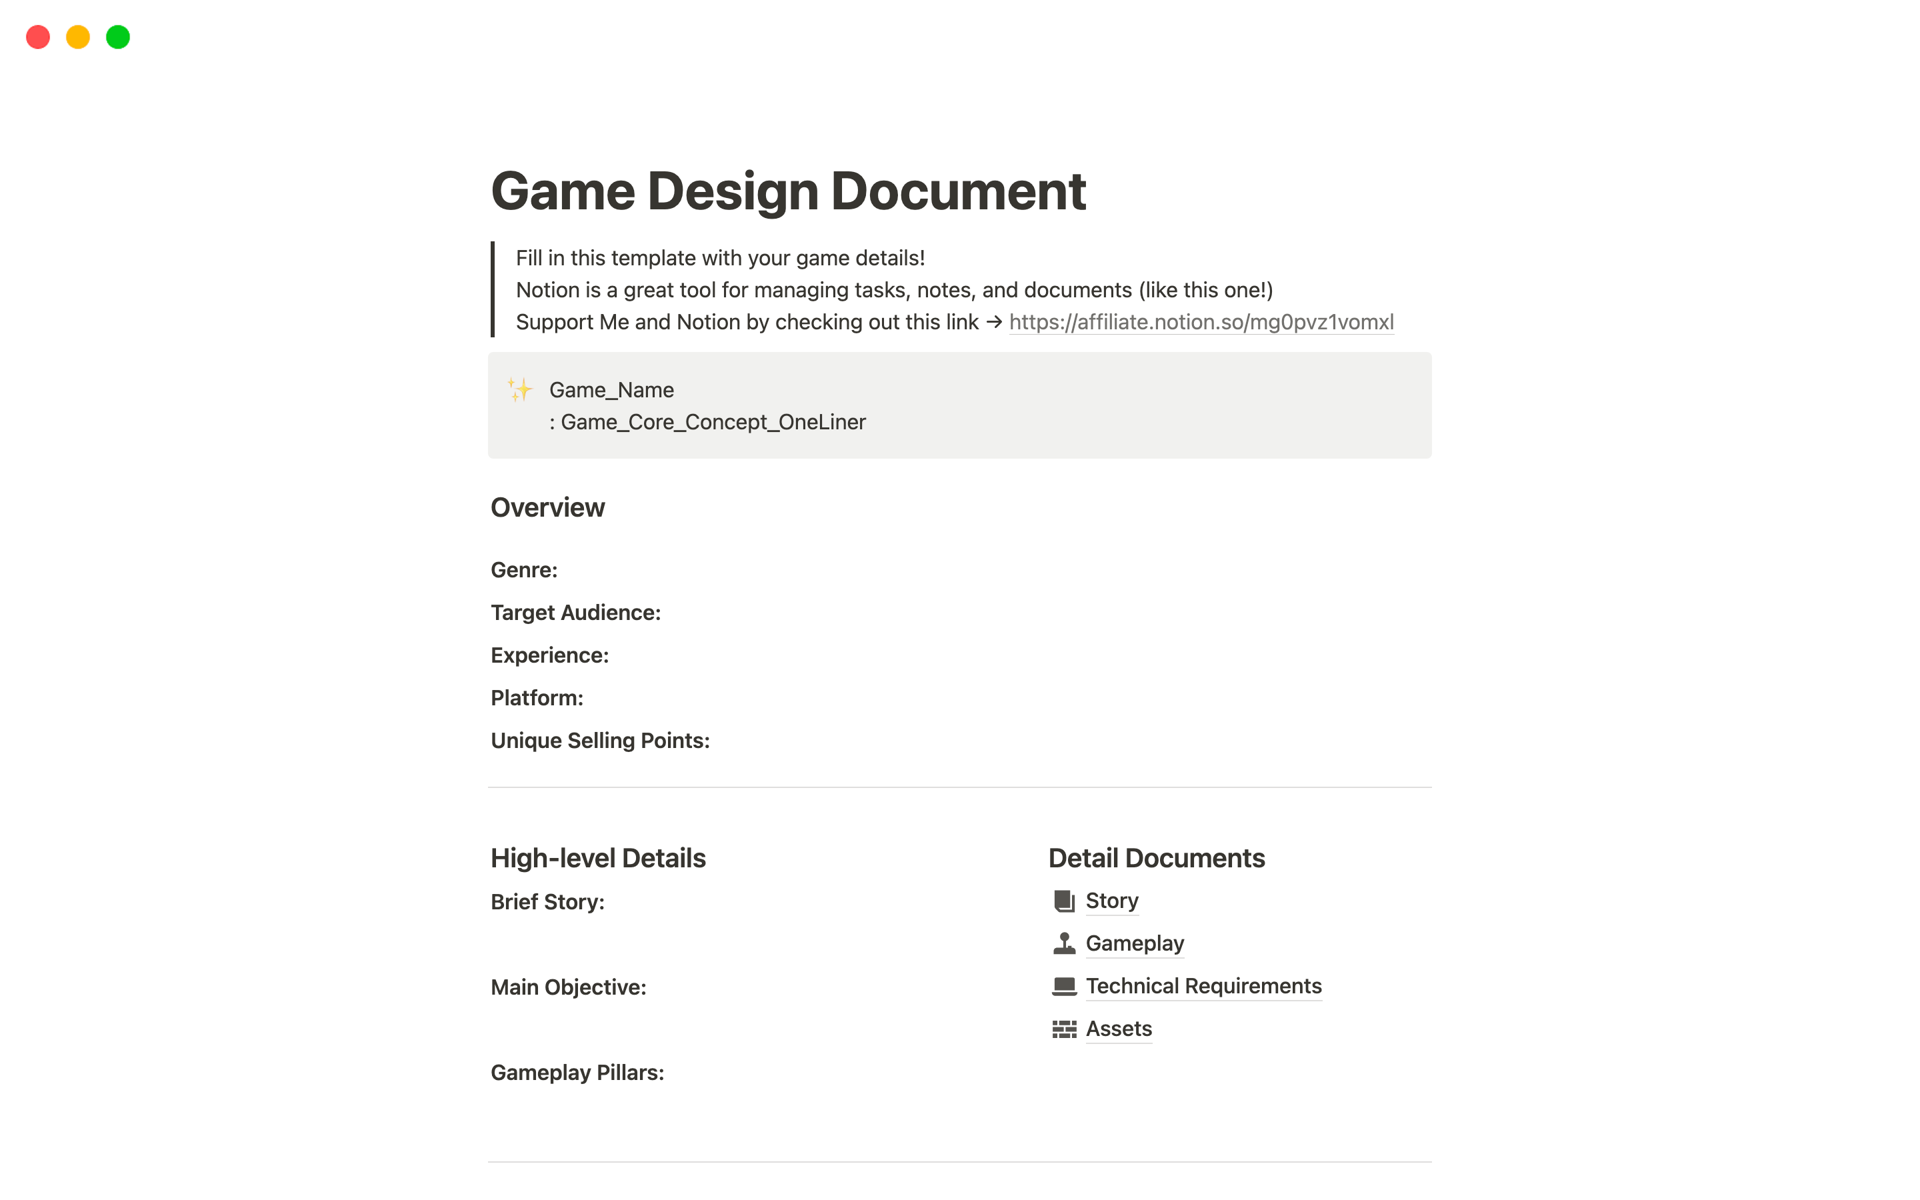 Aperçu du modèle de Game Design Document